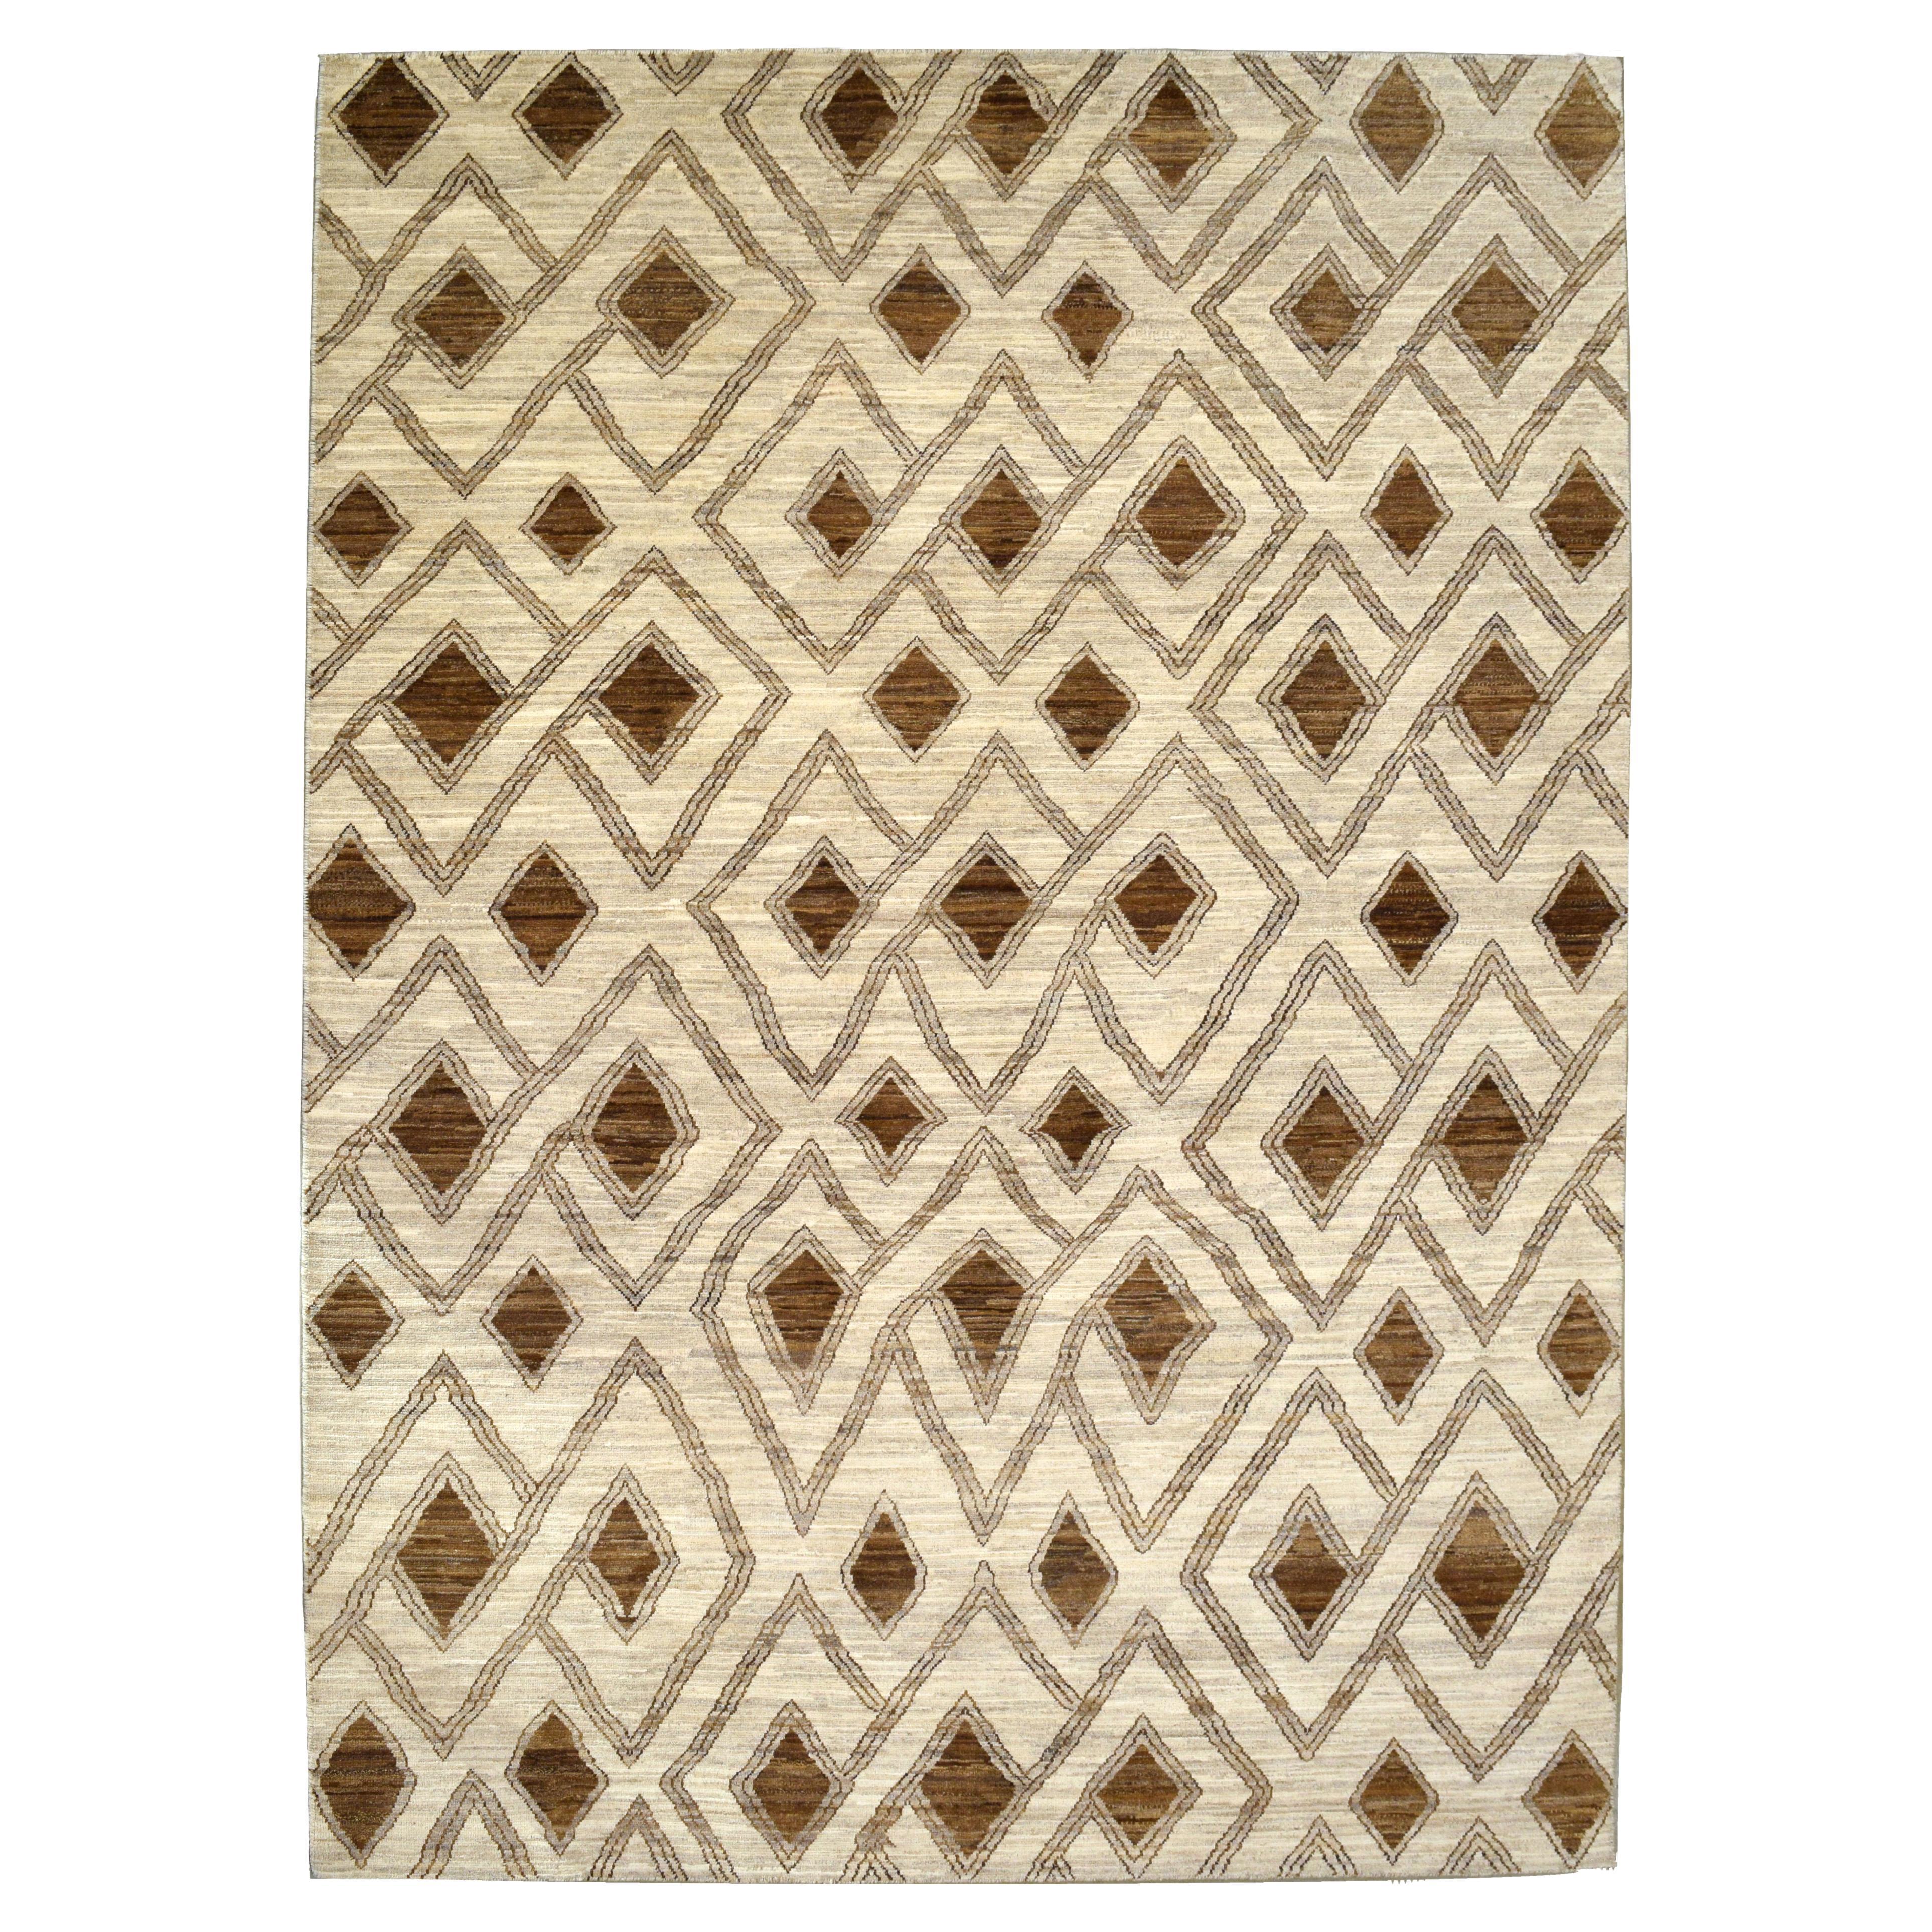 Geometric Neutral Wool Carpet in Brown and Cream